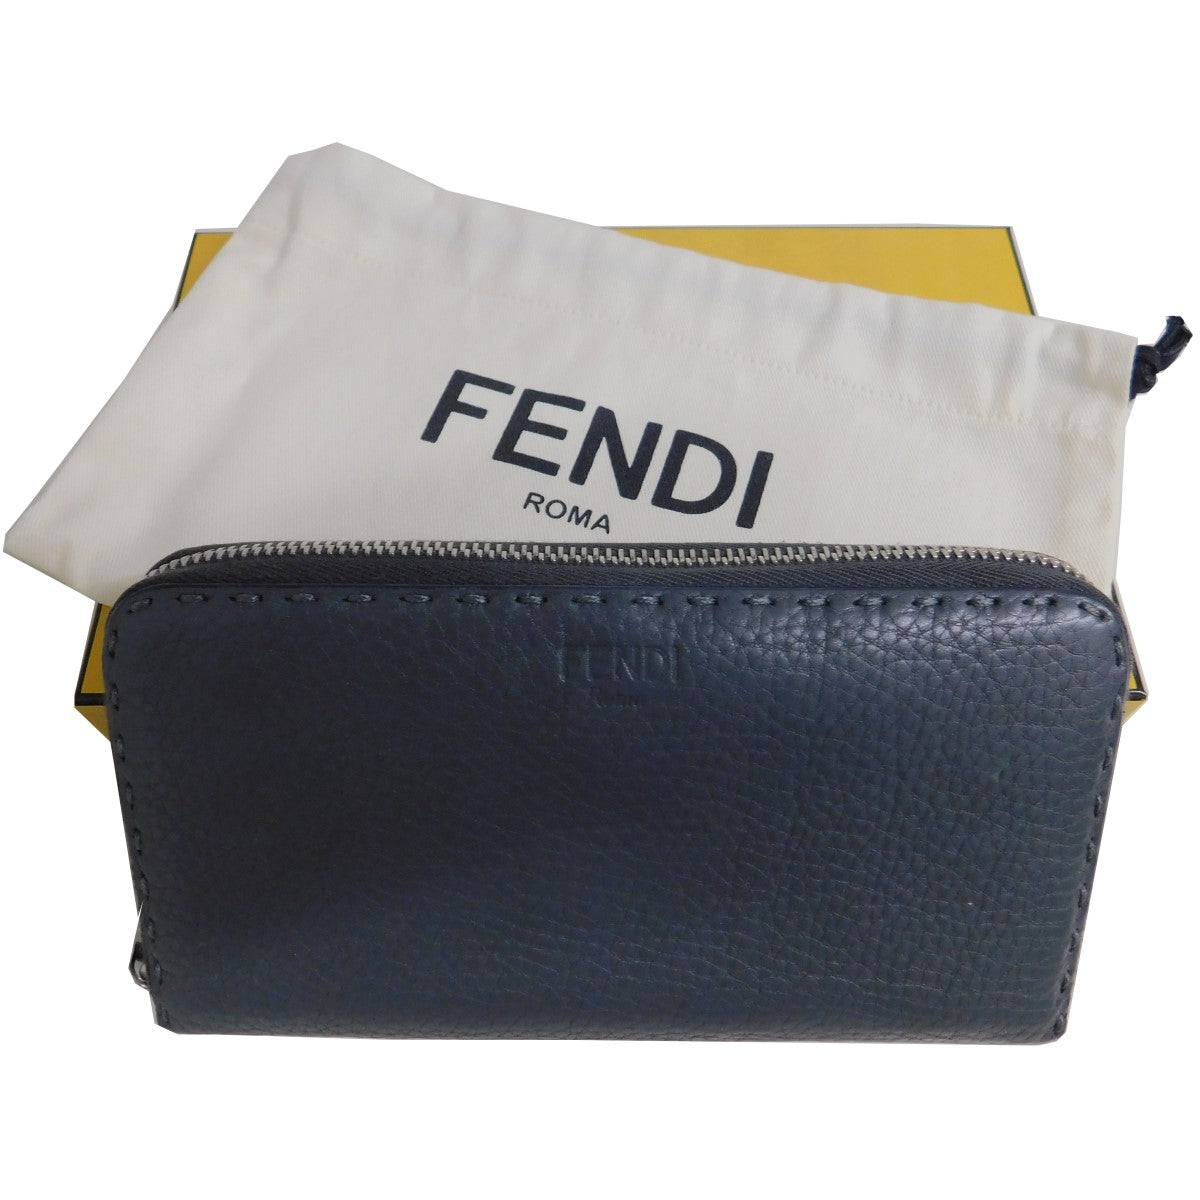 FENDI フェンディ 長財布 完全新品未使用です。８万円丁度までなら可能です